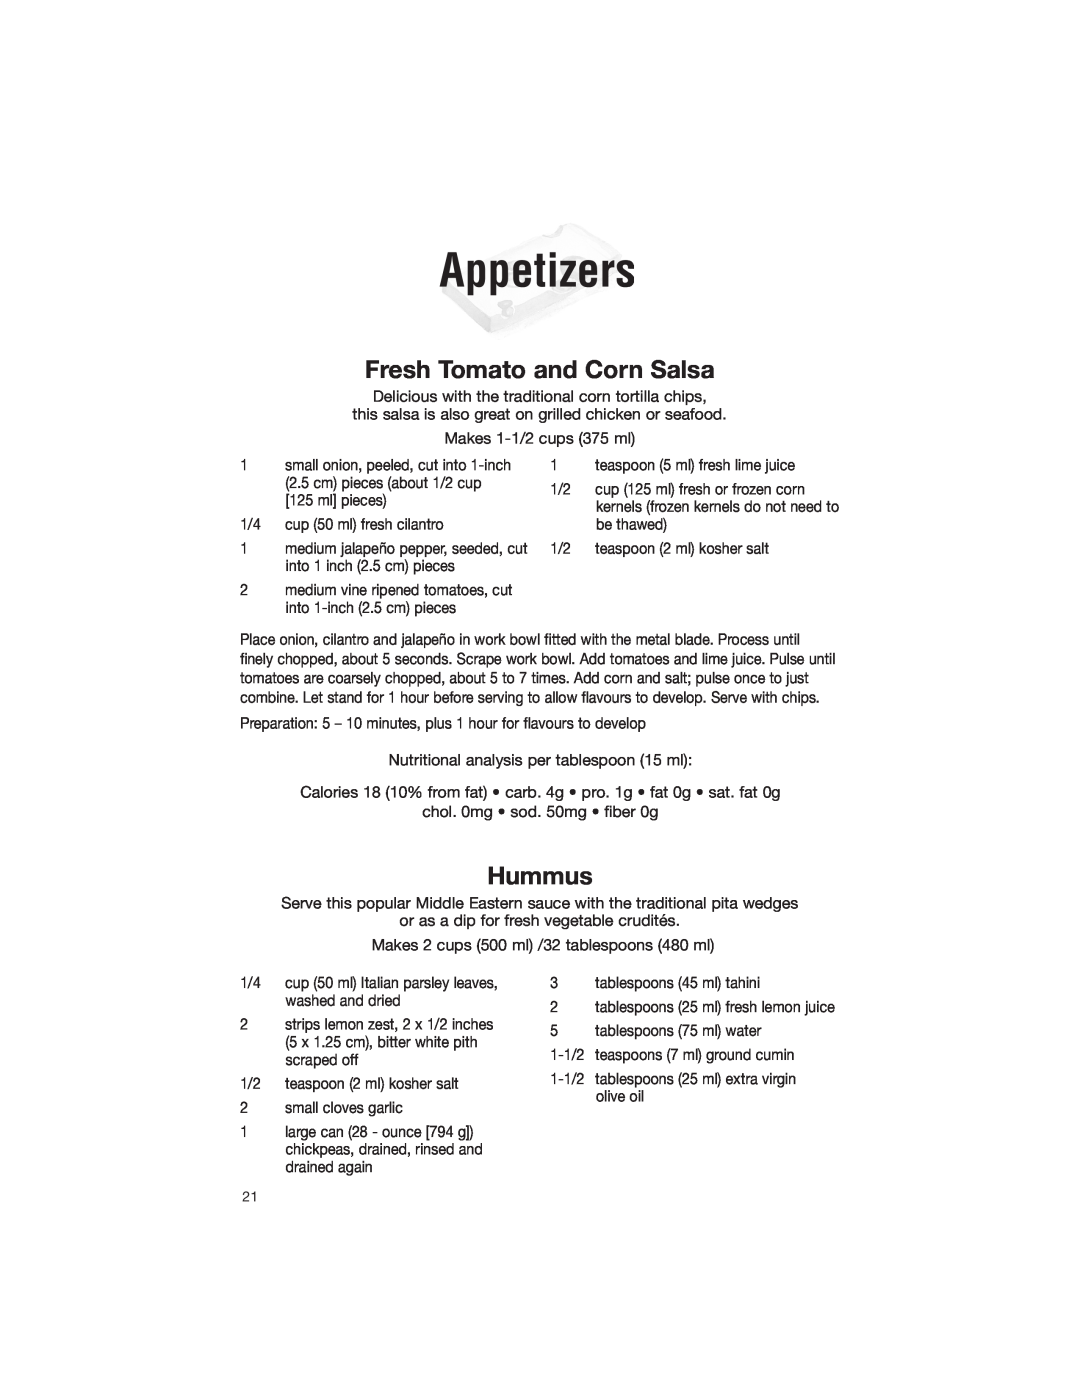 Cuisinart DLC-2007NC manual Appetizers, Fresh Tomato and Corn Salsa, Hummus 